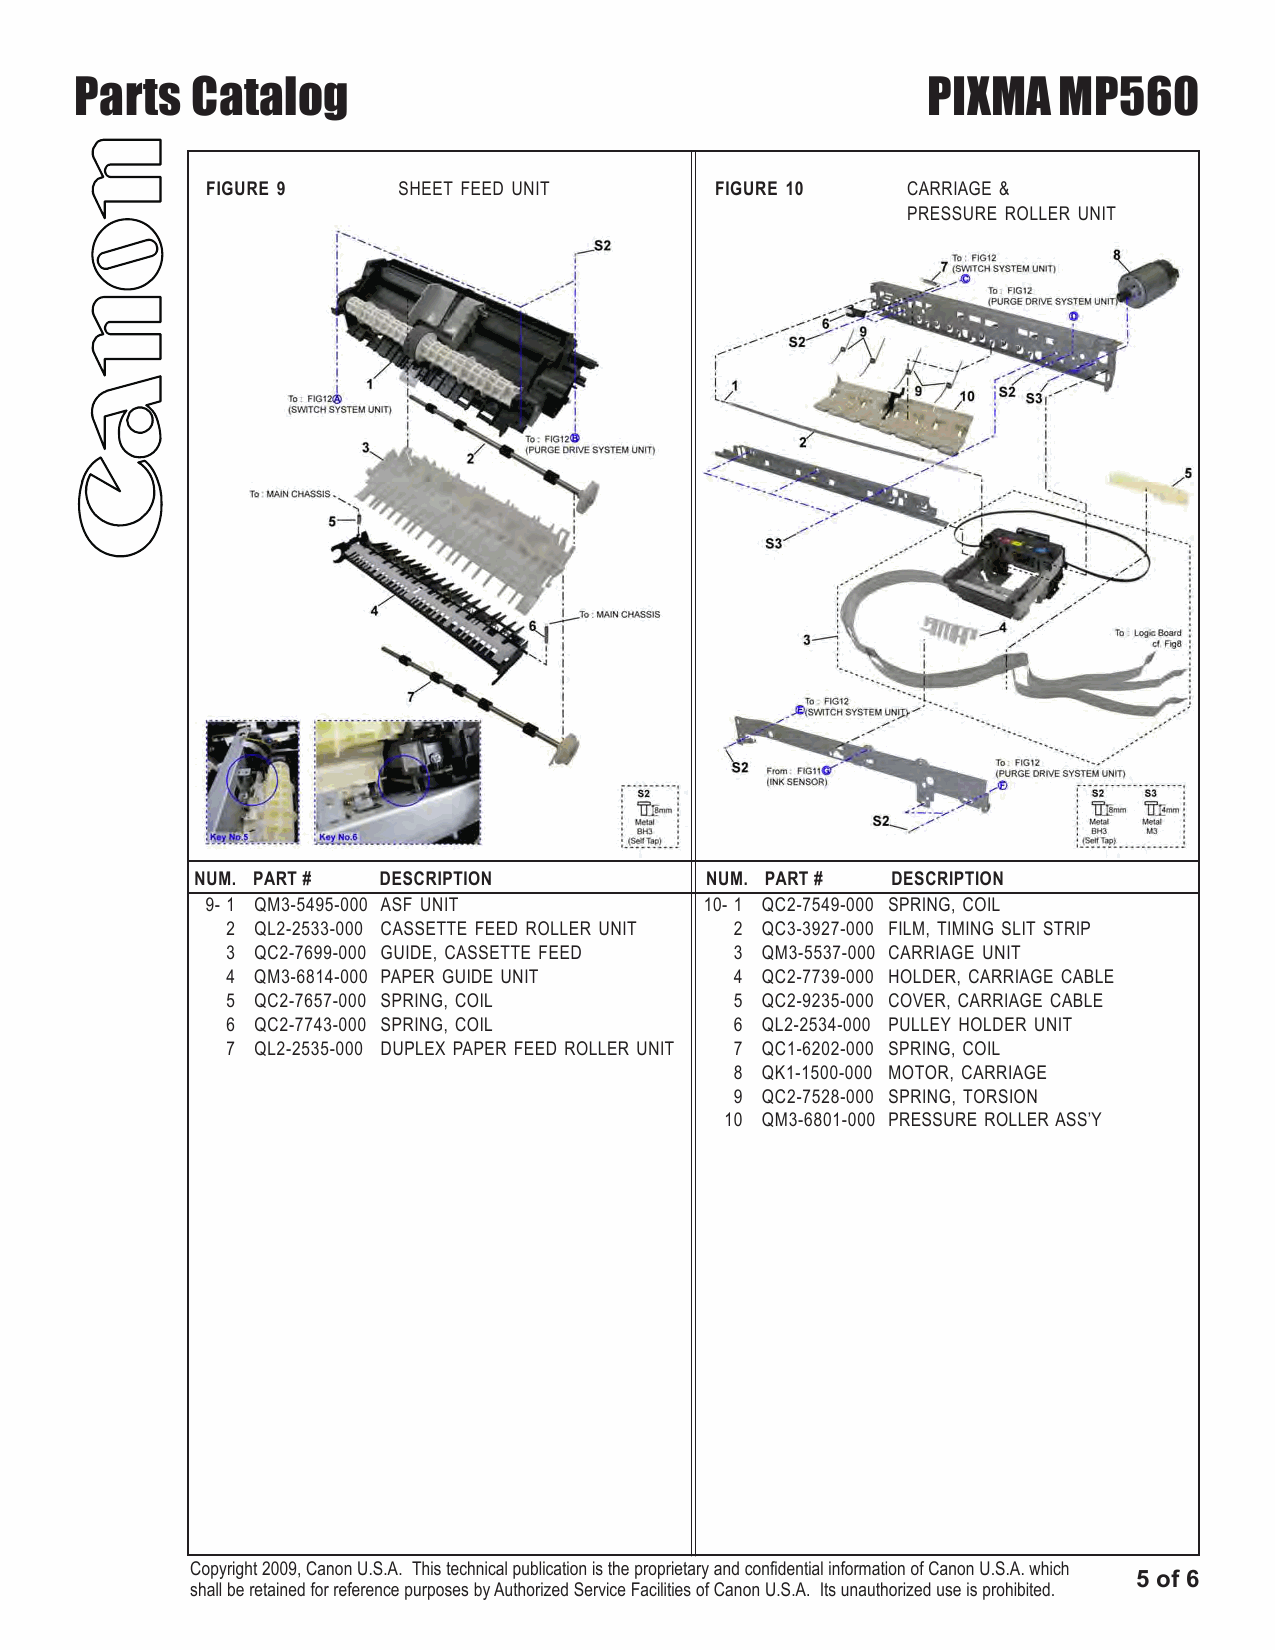 Canon PIXMA MP560 Parts Catalog Manual-6